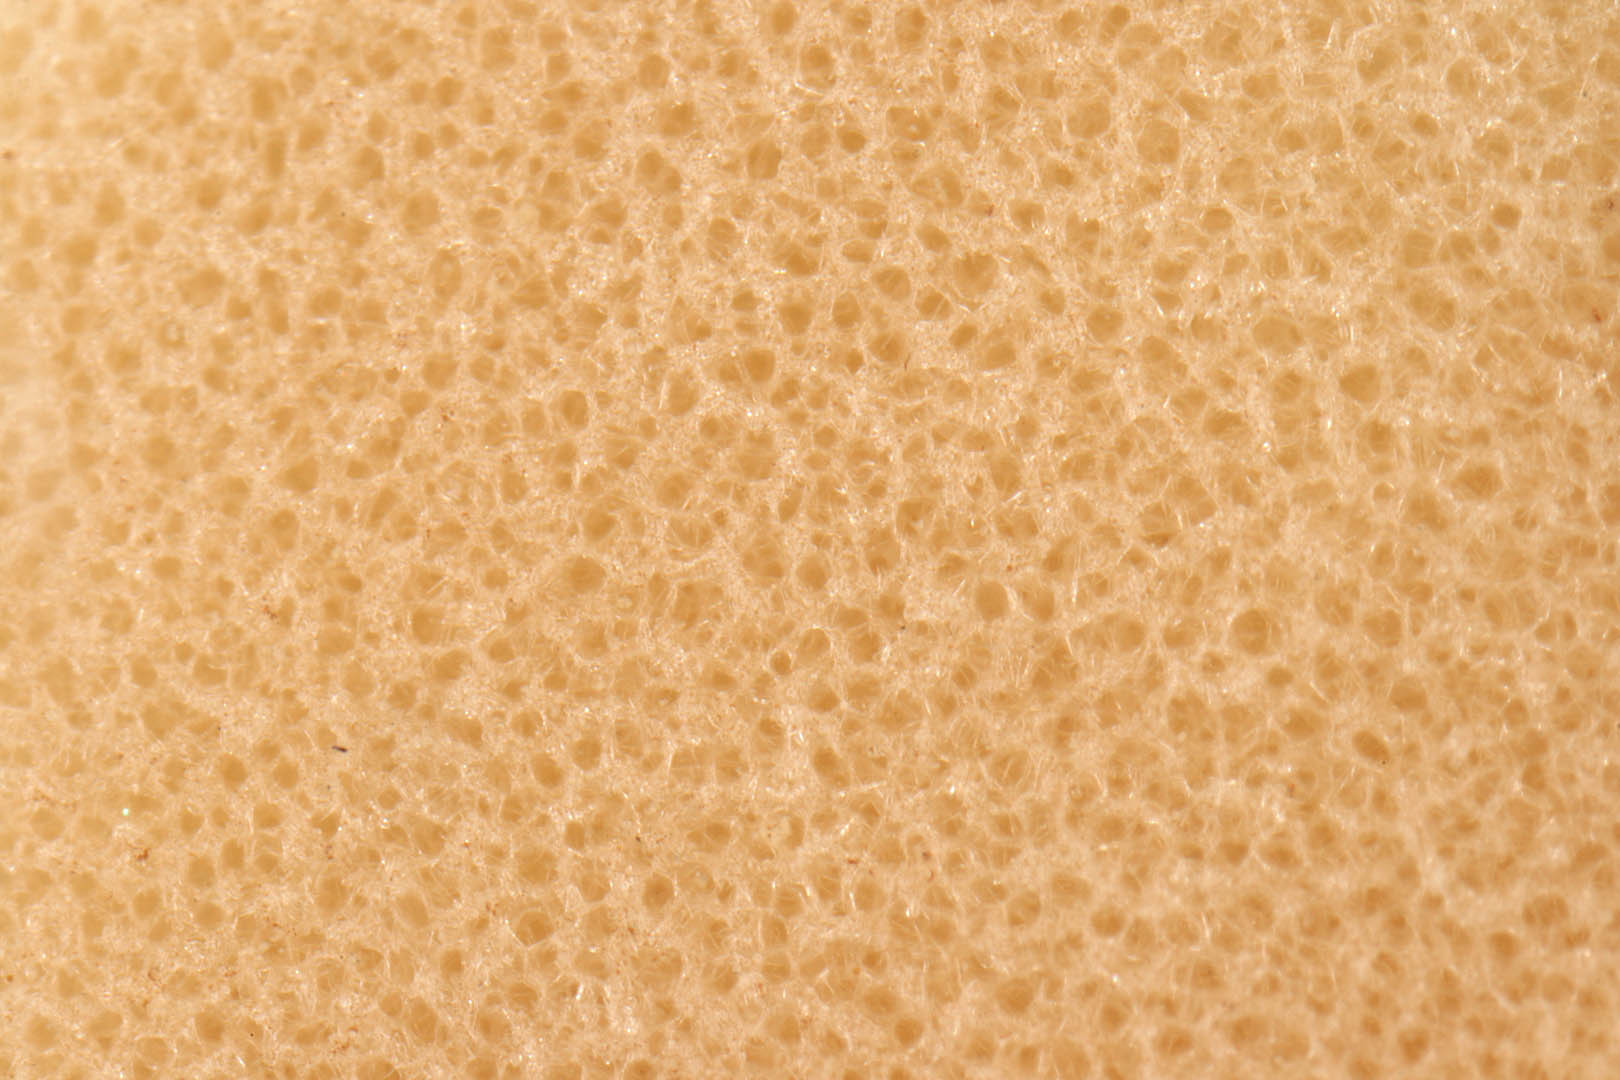 Image of compressed purse sponge